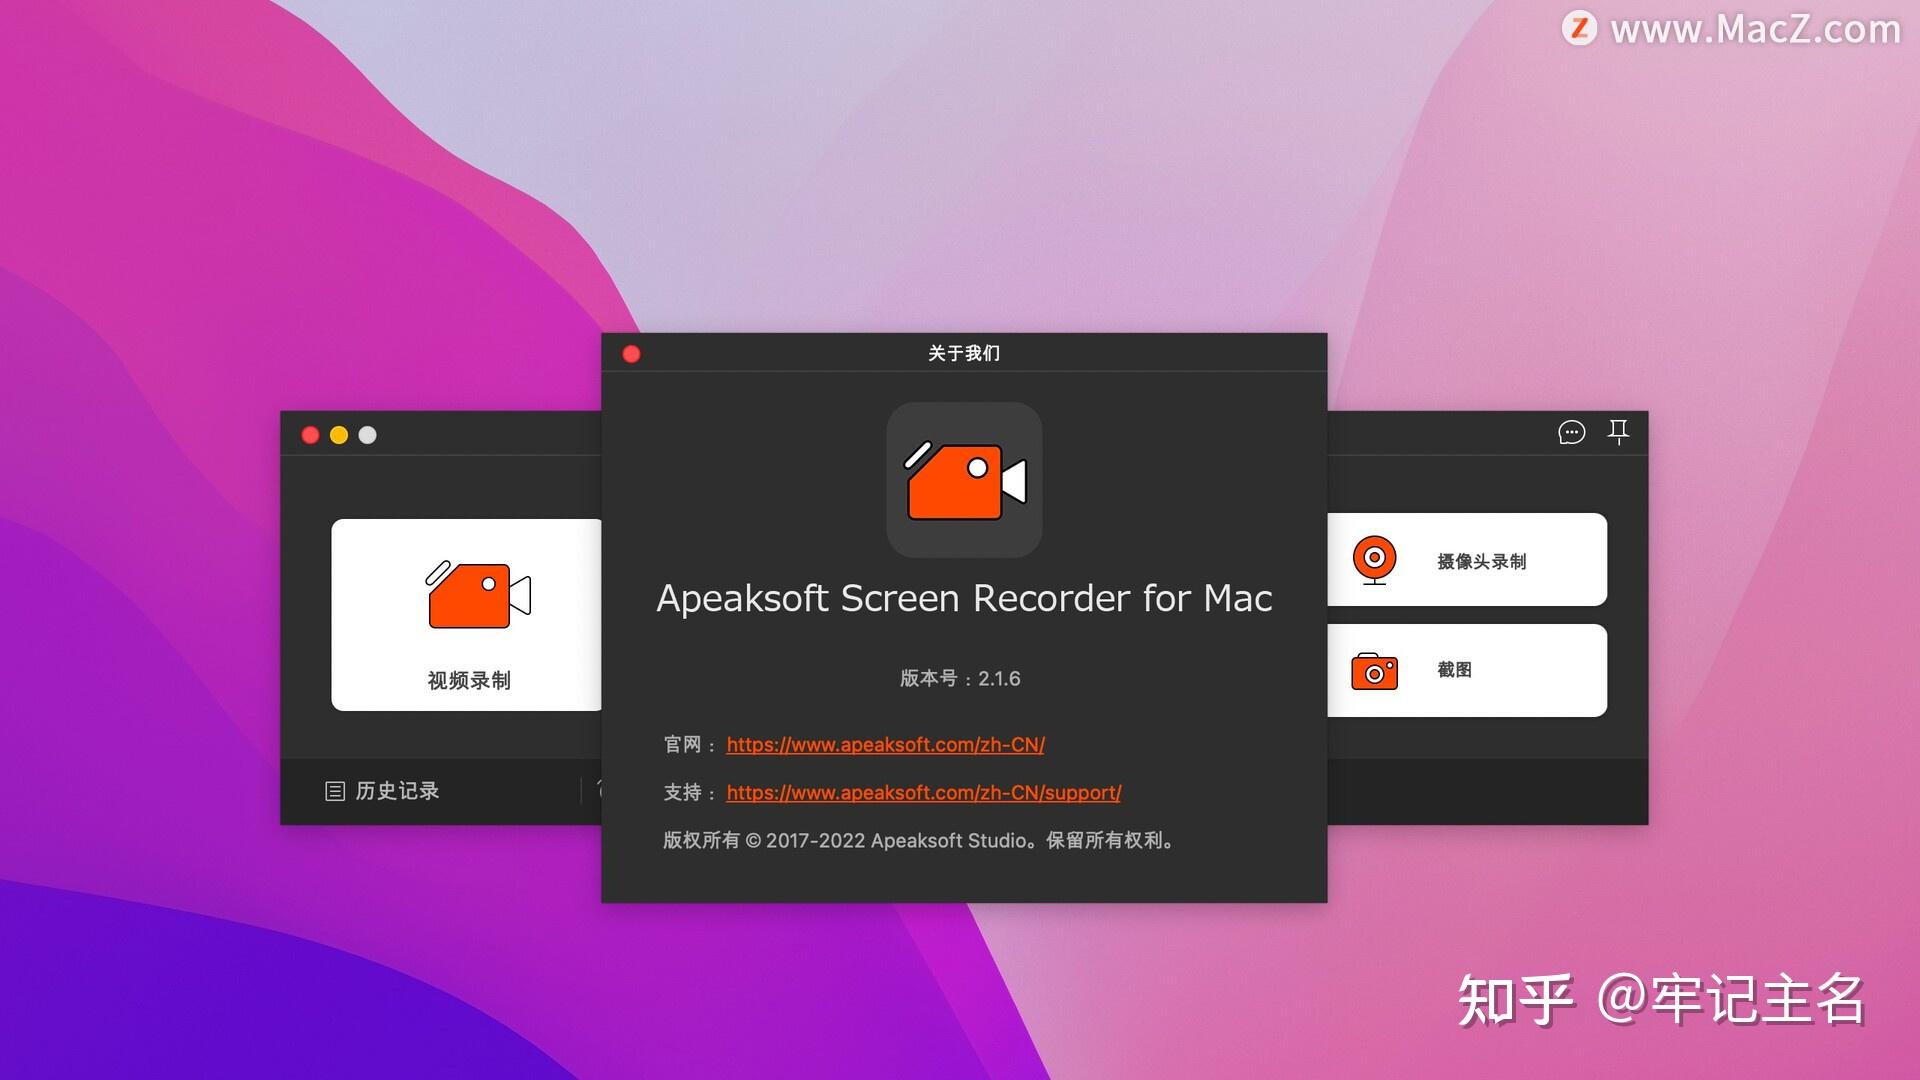 Apeaksoft Screen Recorder 2.3.8 download